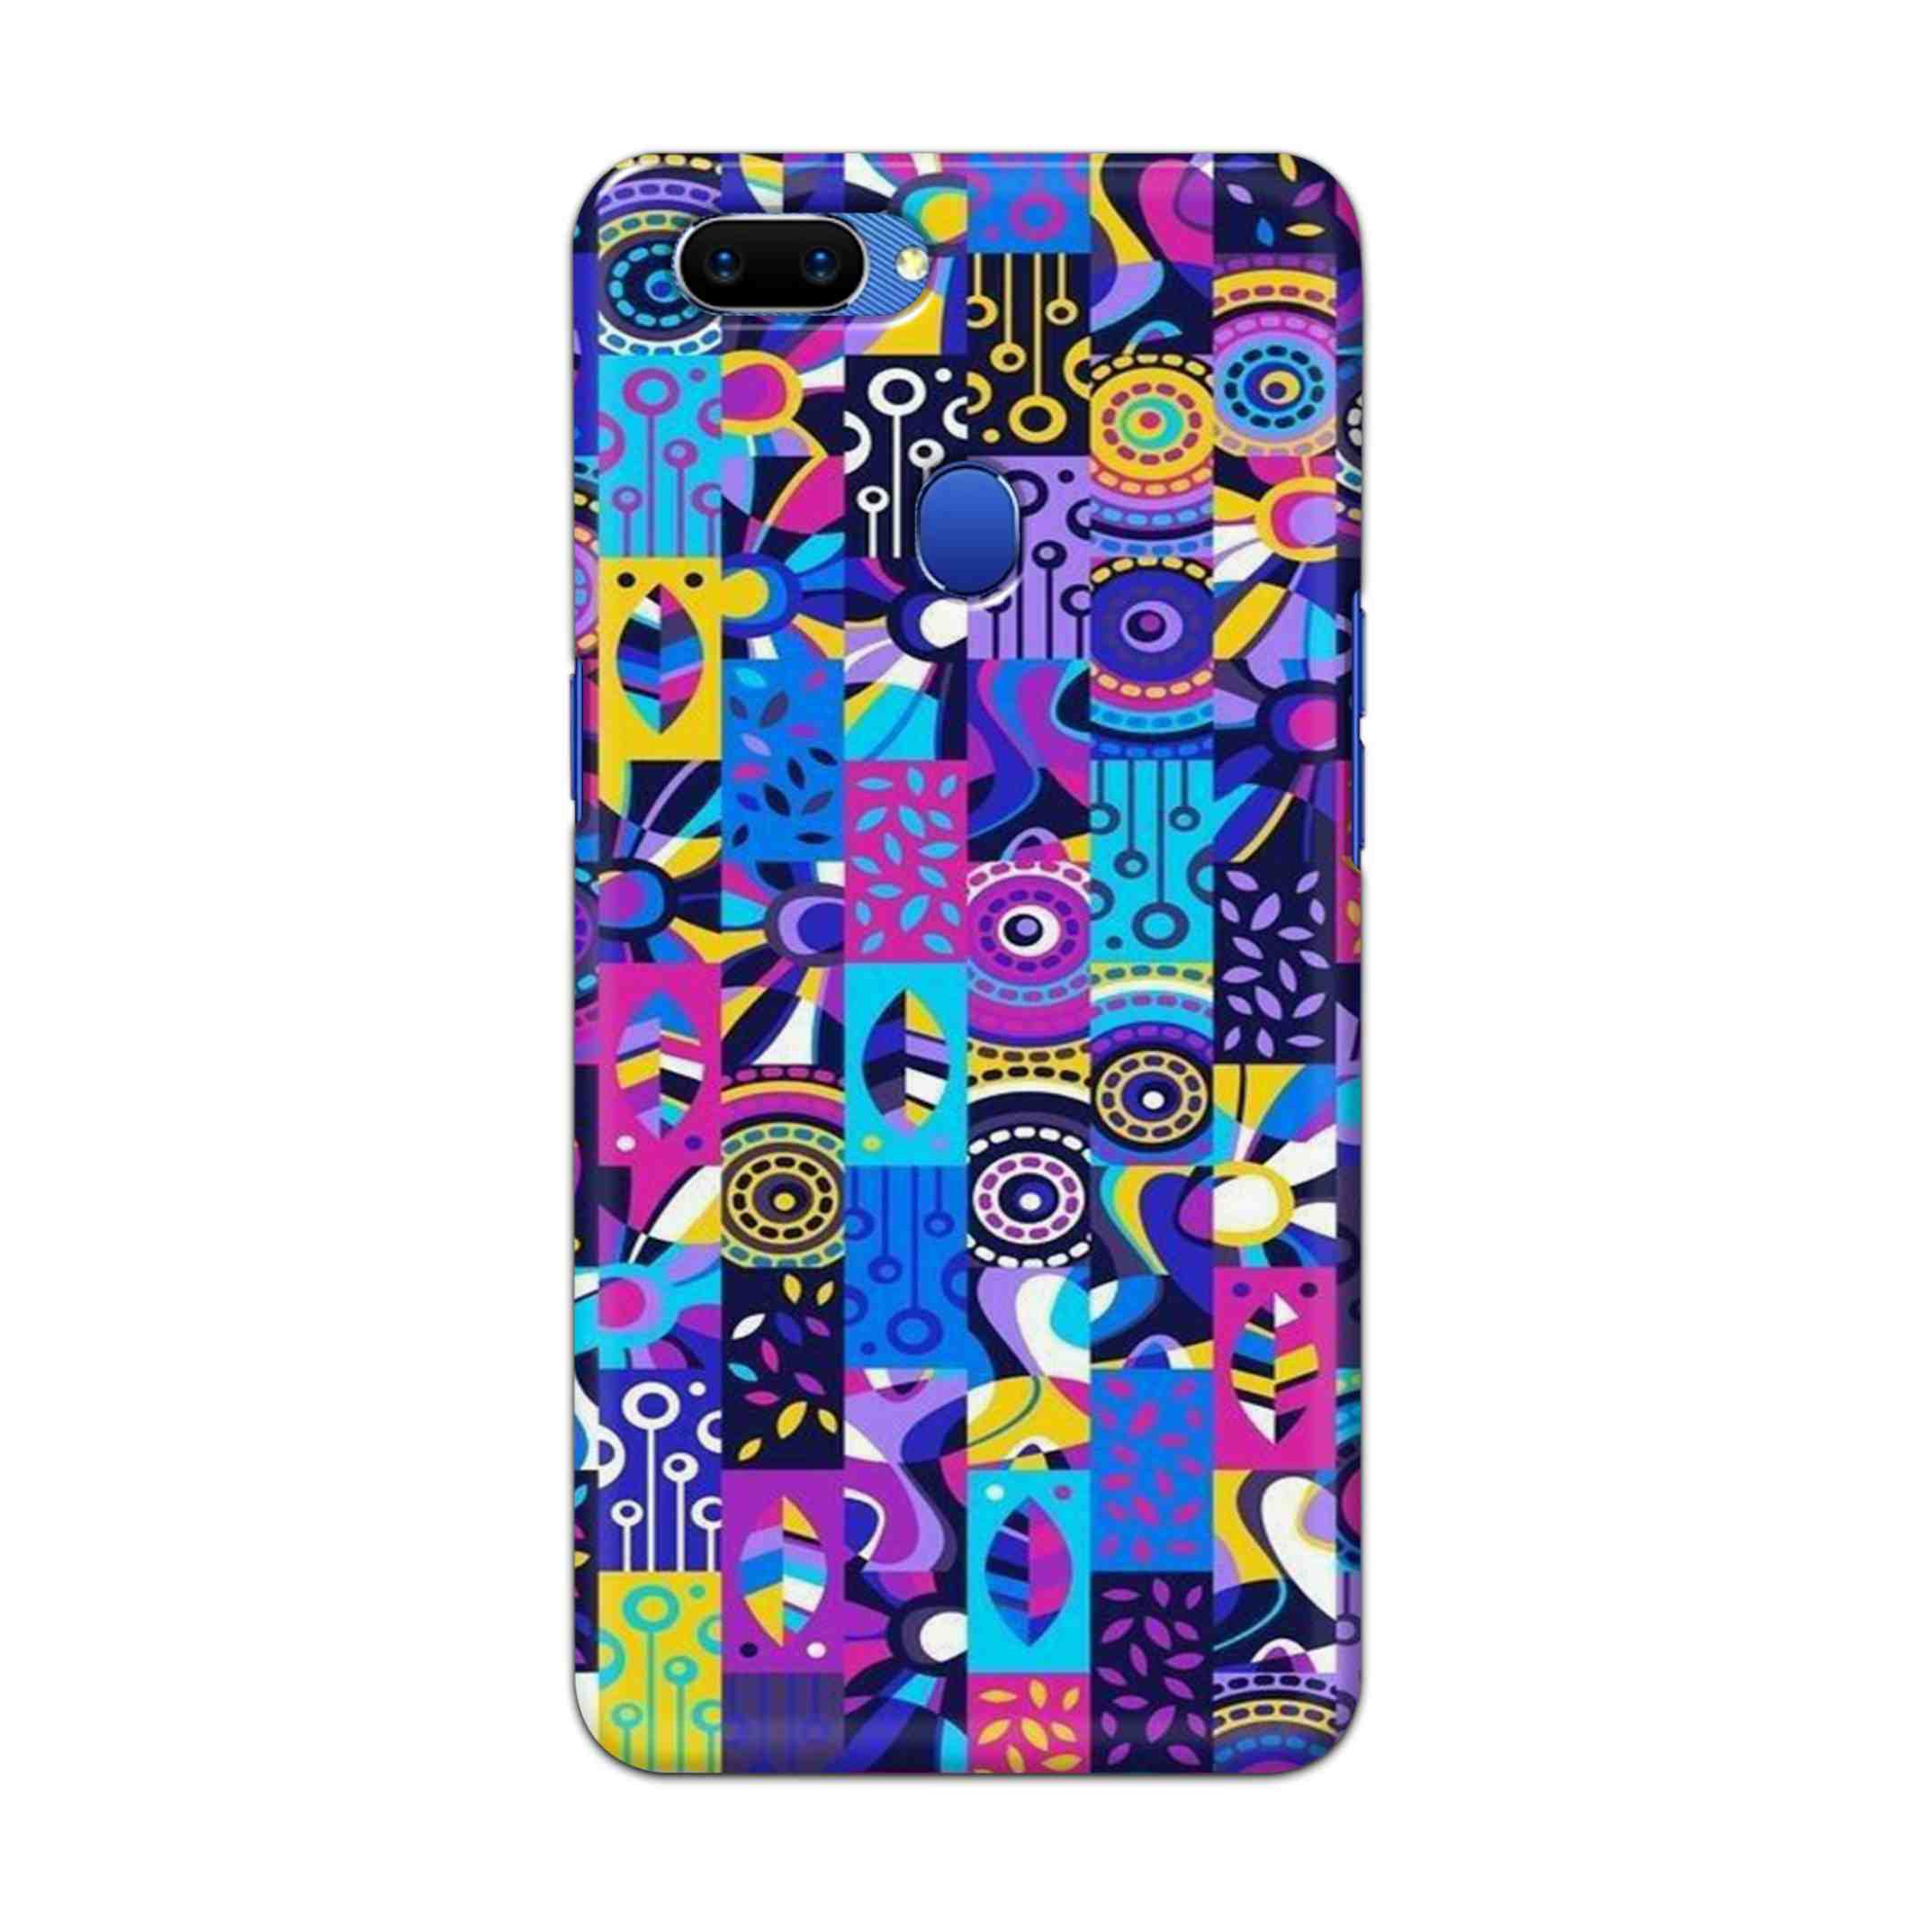 Buy Rainbow Art Hard Back Mobile Phone Case Cover For Oppo A5 Online